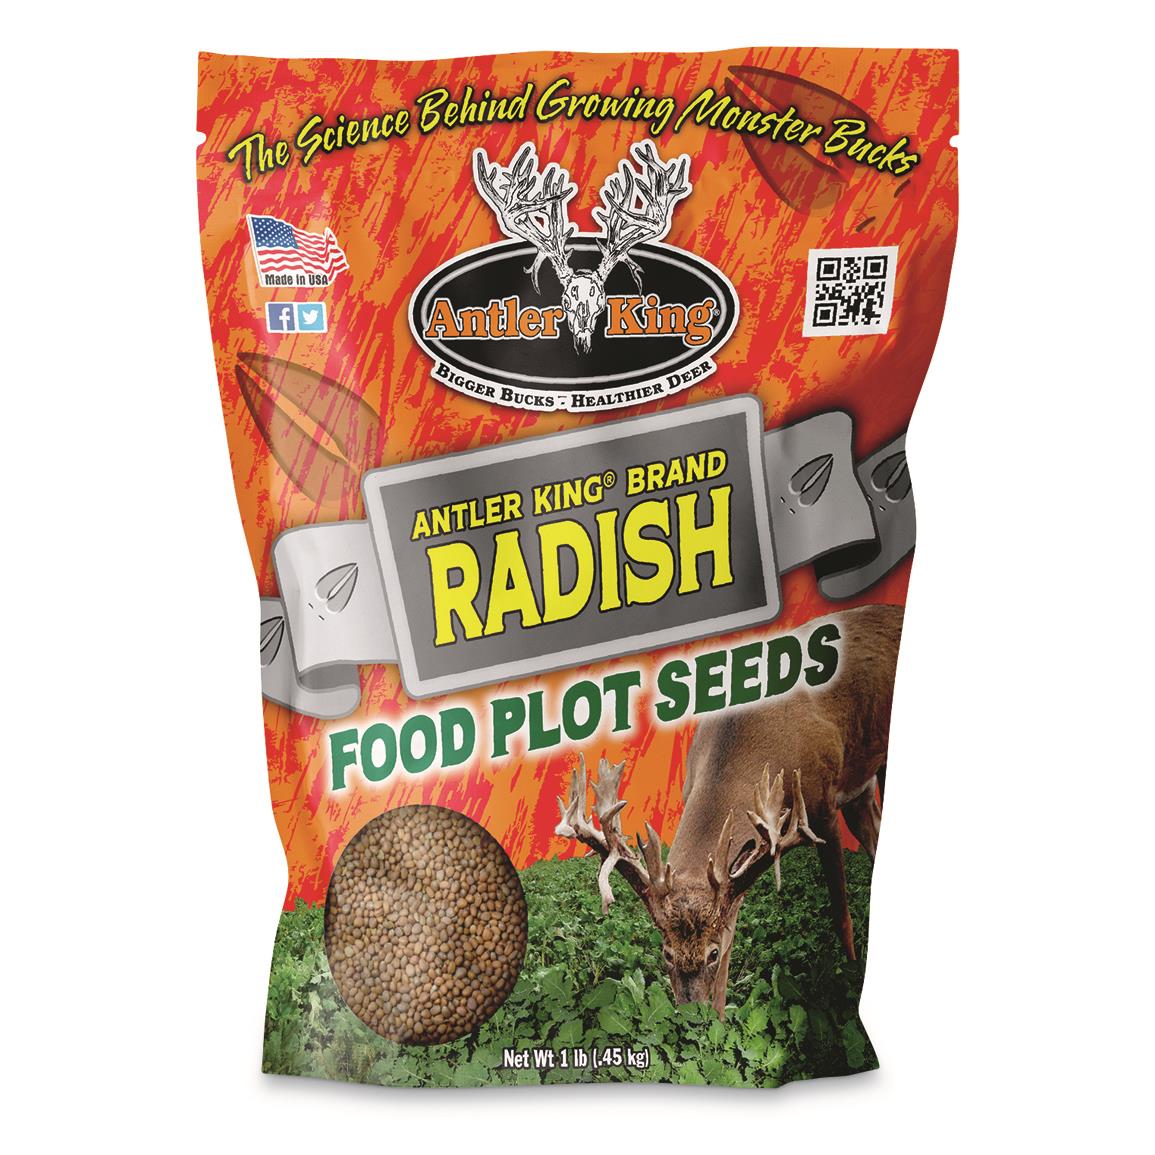 1-lb package of Radish